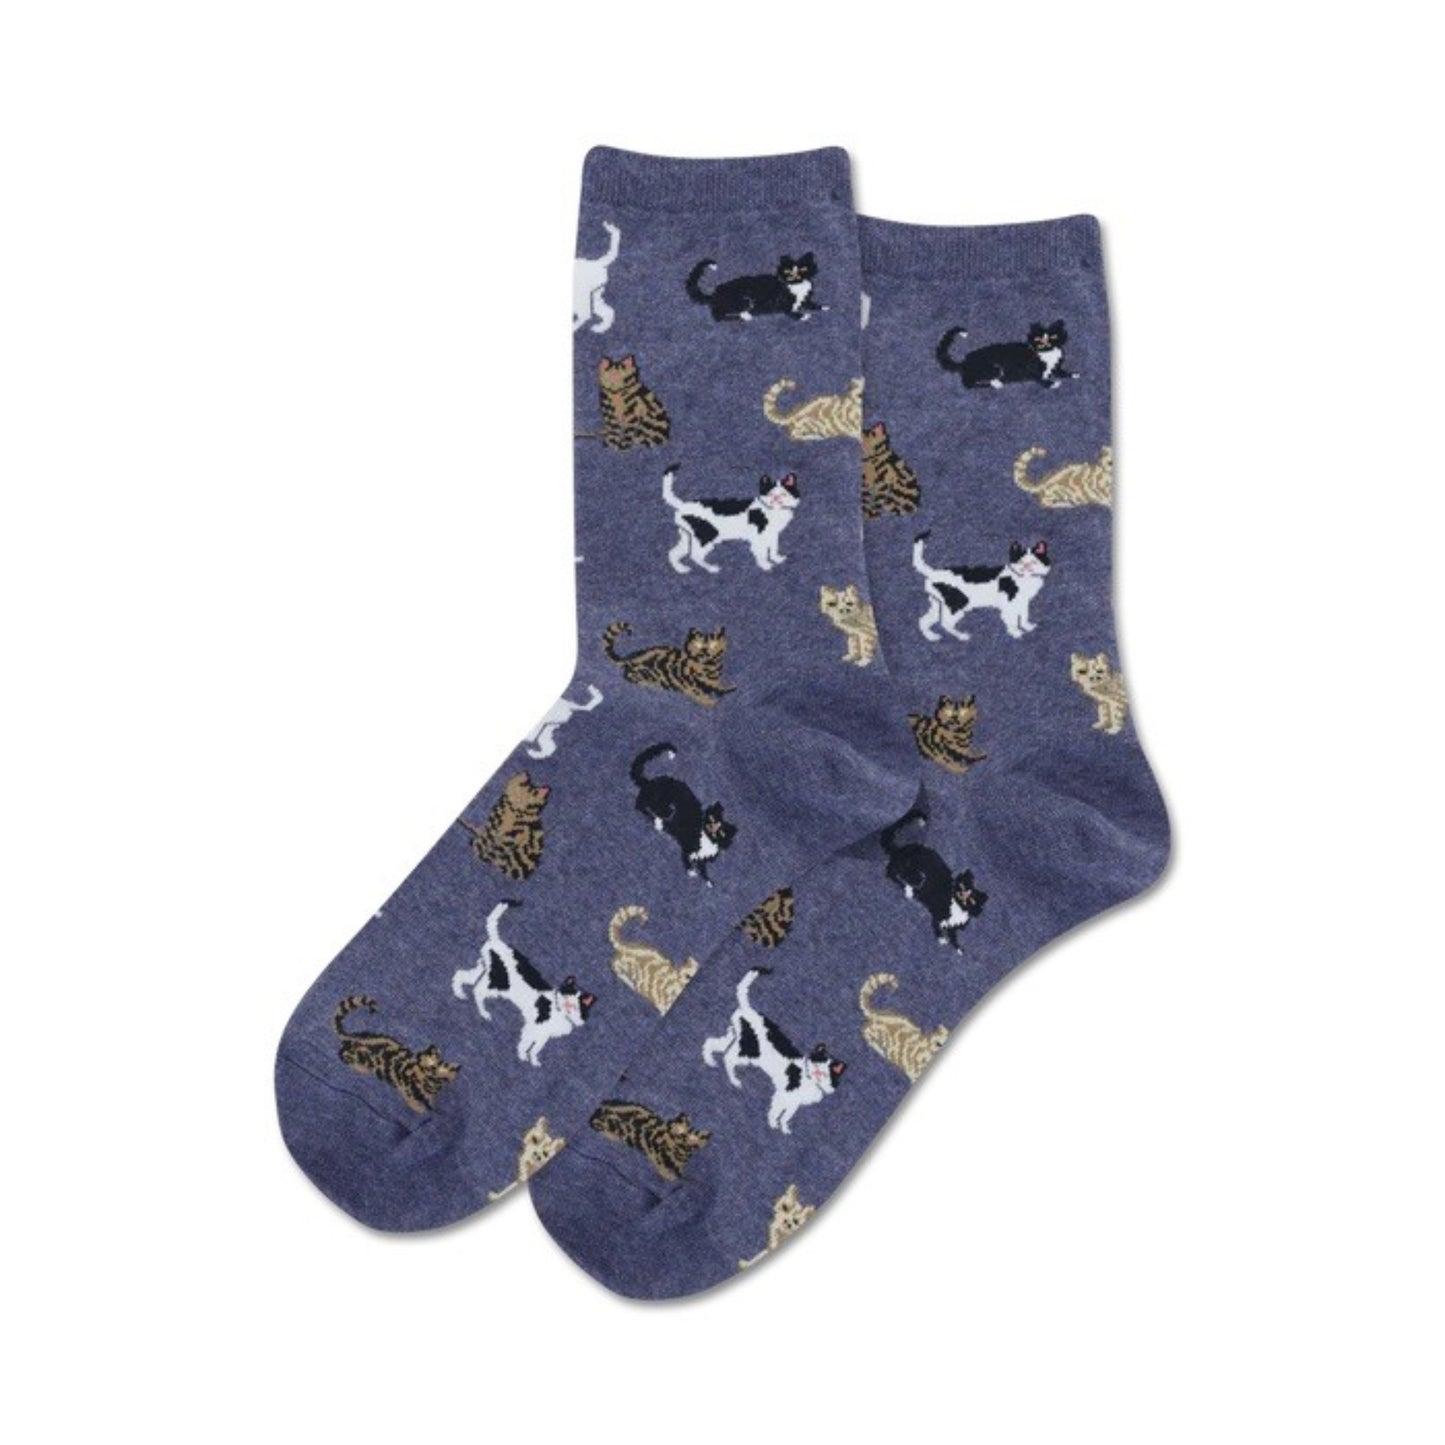 Hot Sox Cat Socks - Multiple Colors